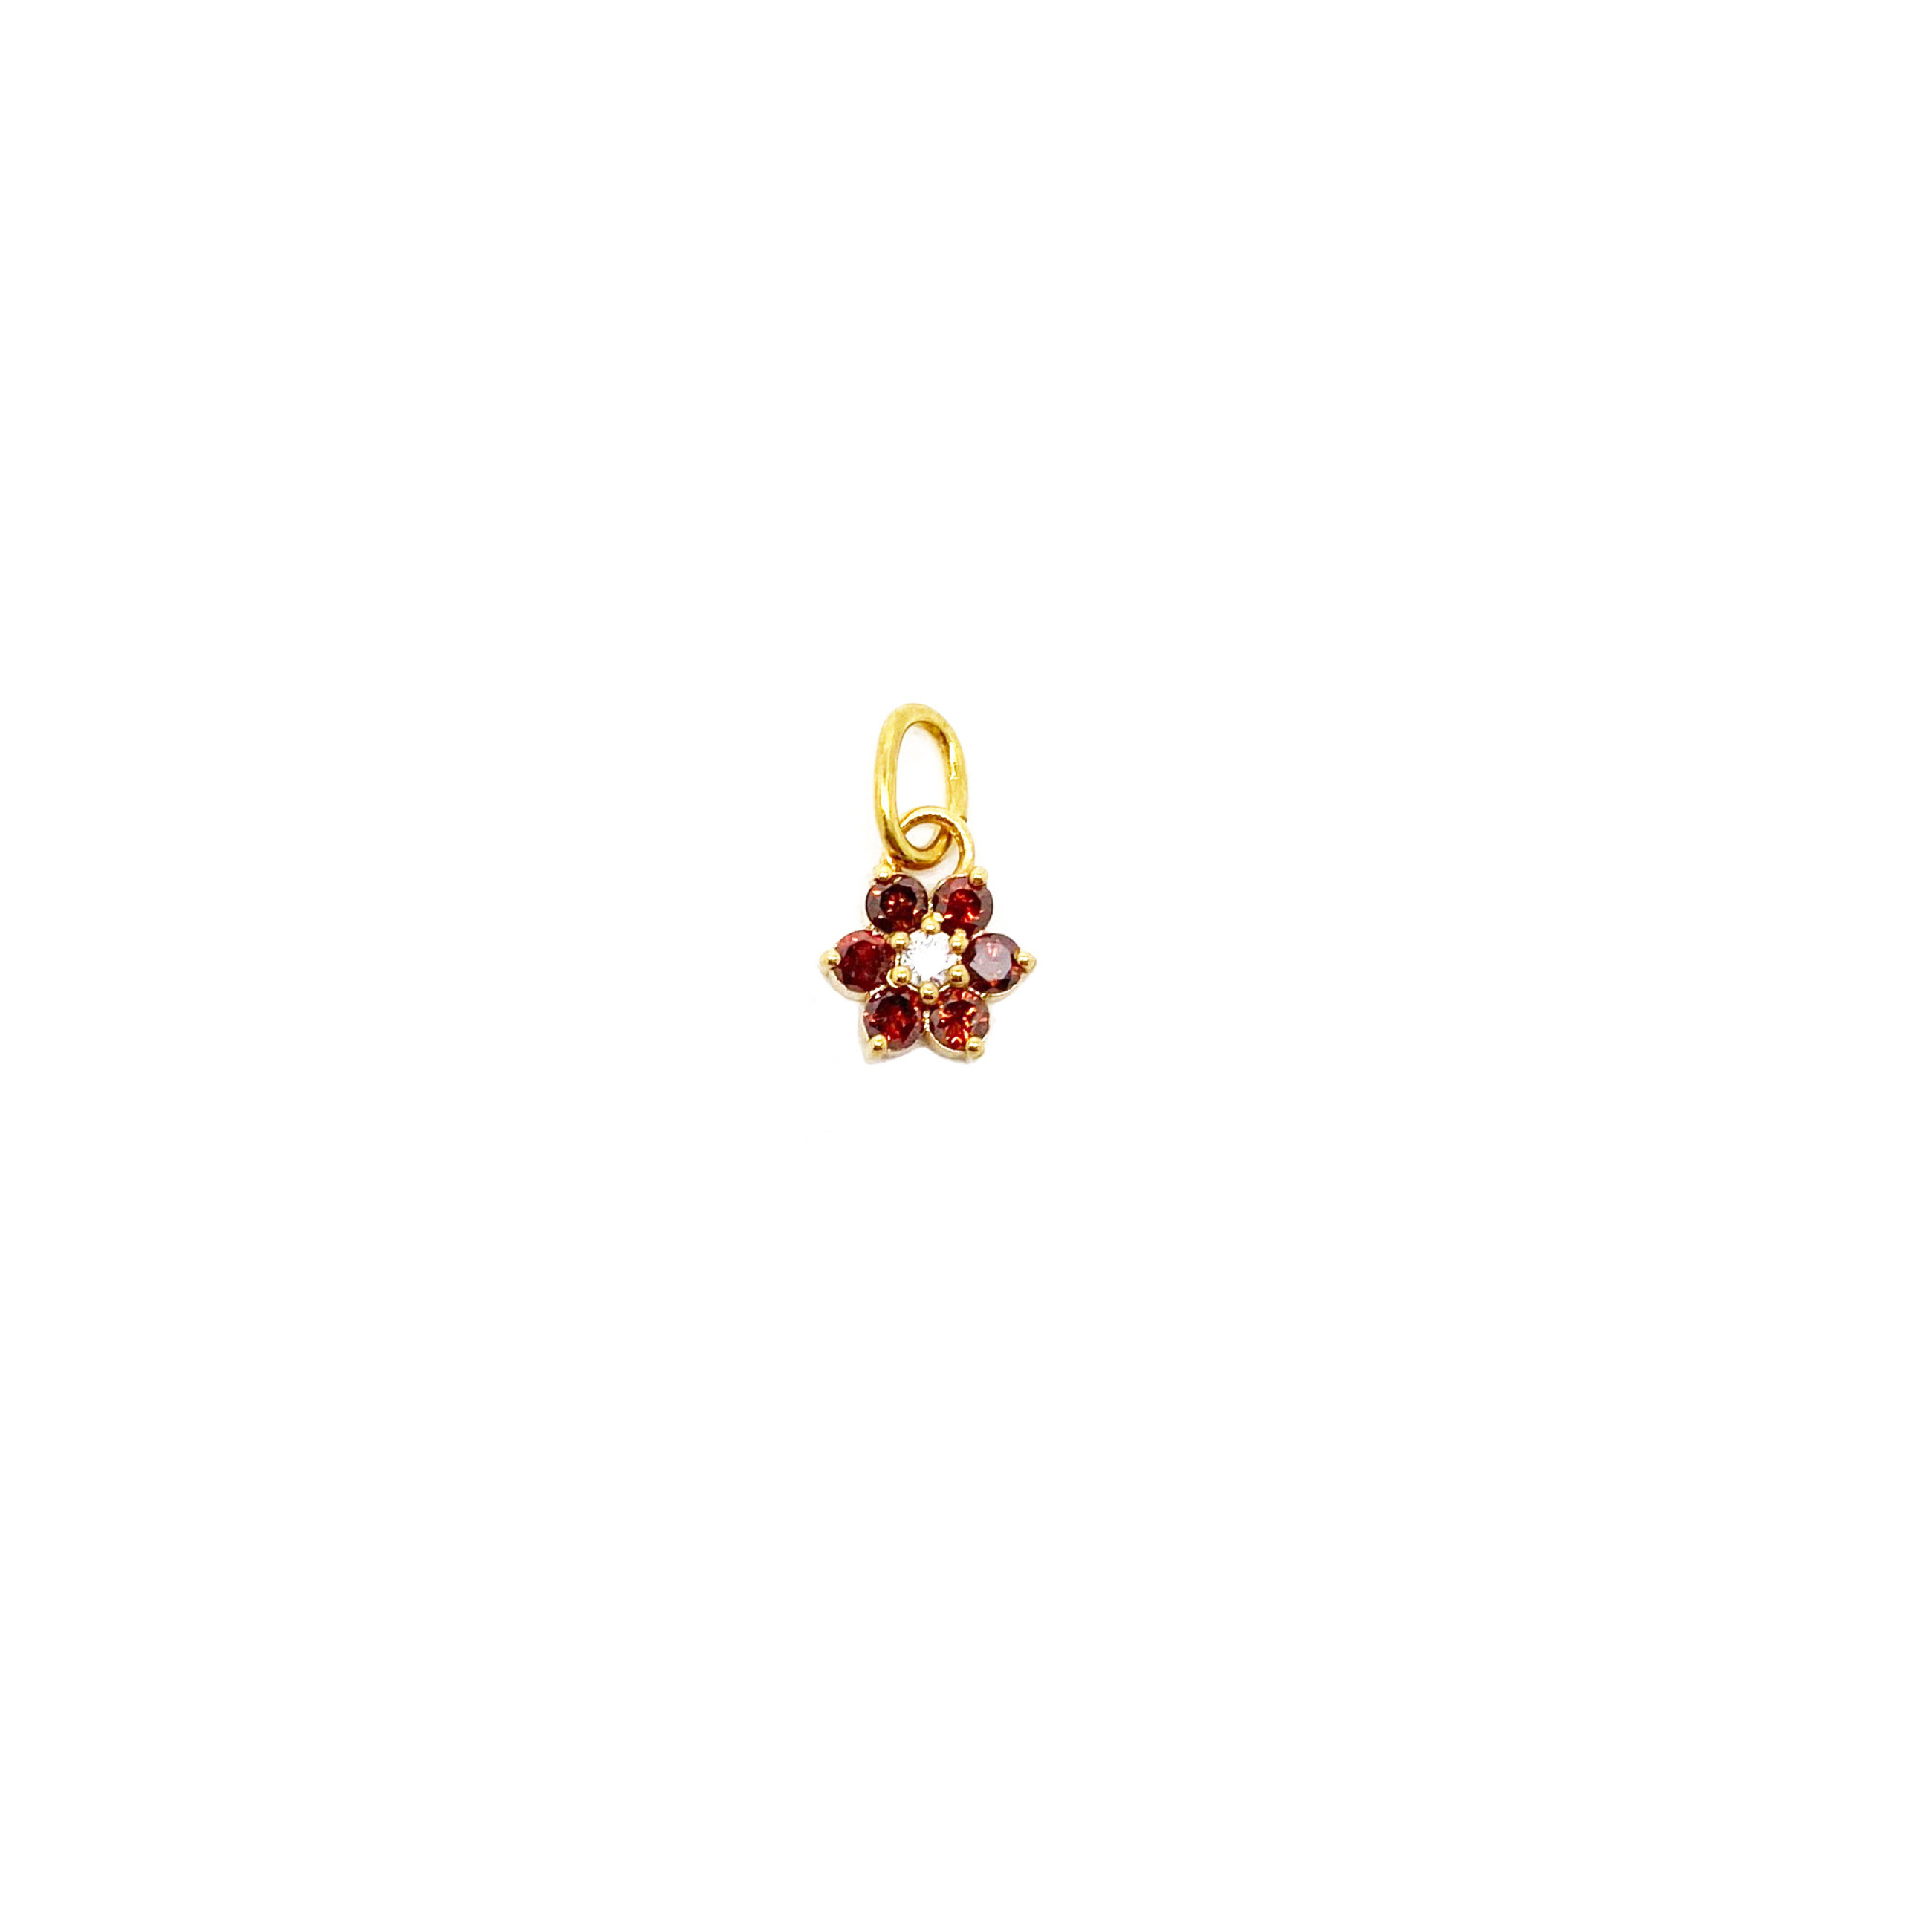 Jumbo Cognac Diamond Flower Pendant